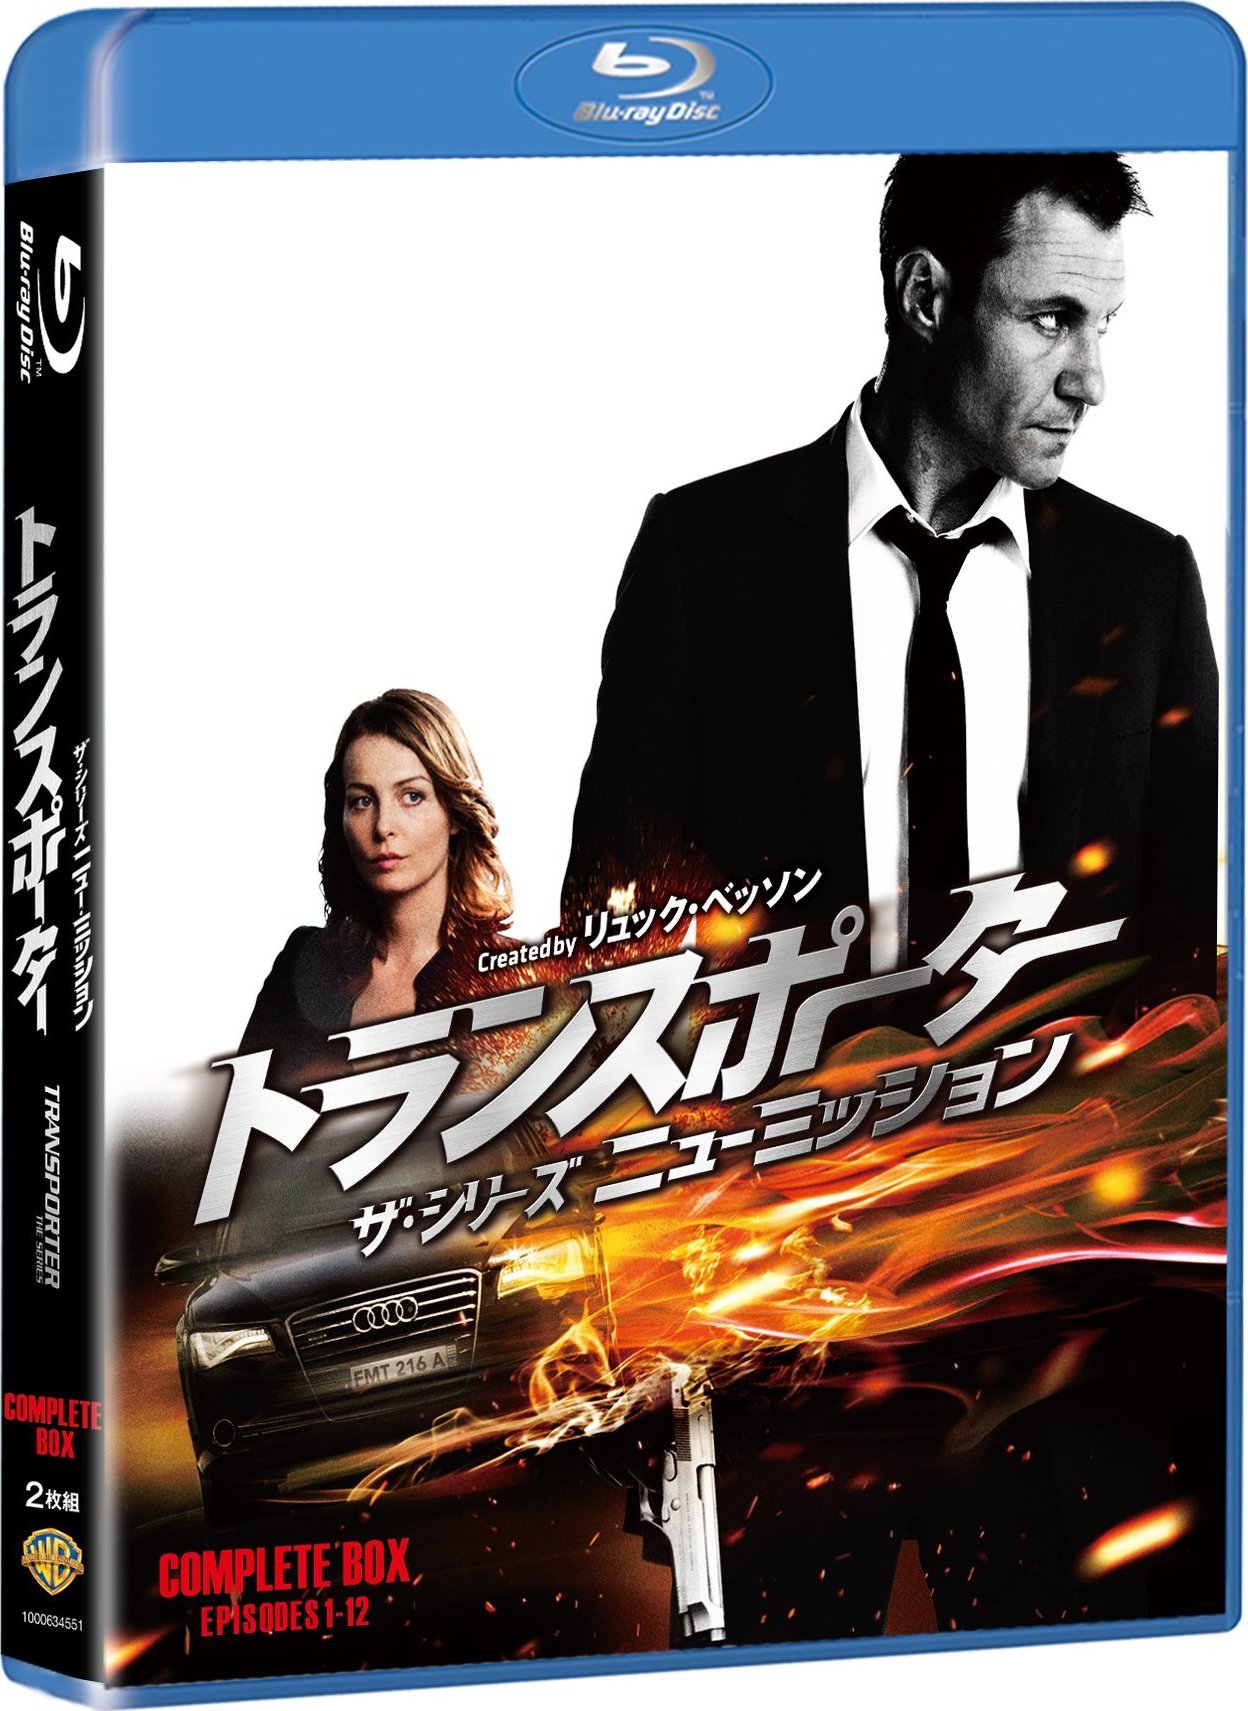 Transporter The Series Season 2 Blu Ray Release Date January 6 17 トランスポーター ザ シリーズ ニューミッション コンプリート ボックス Japan